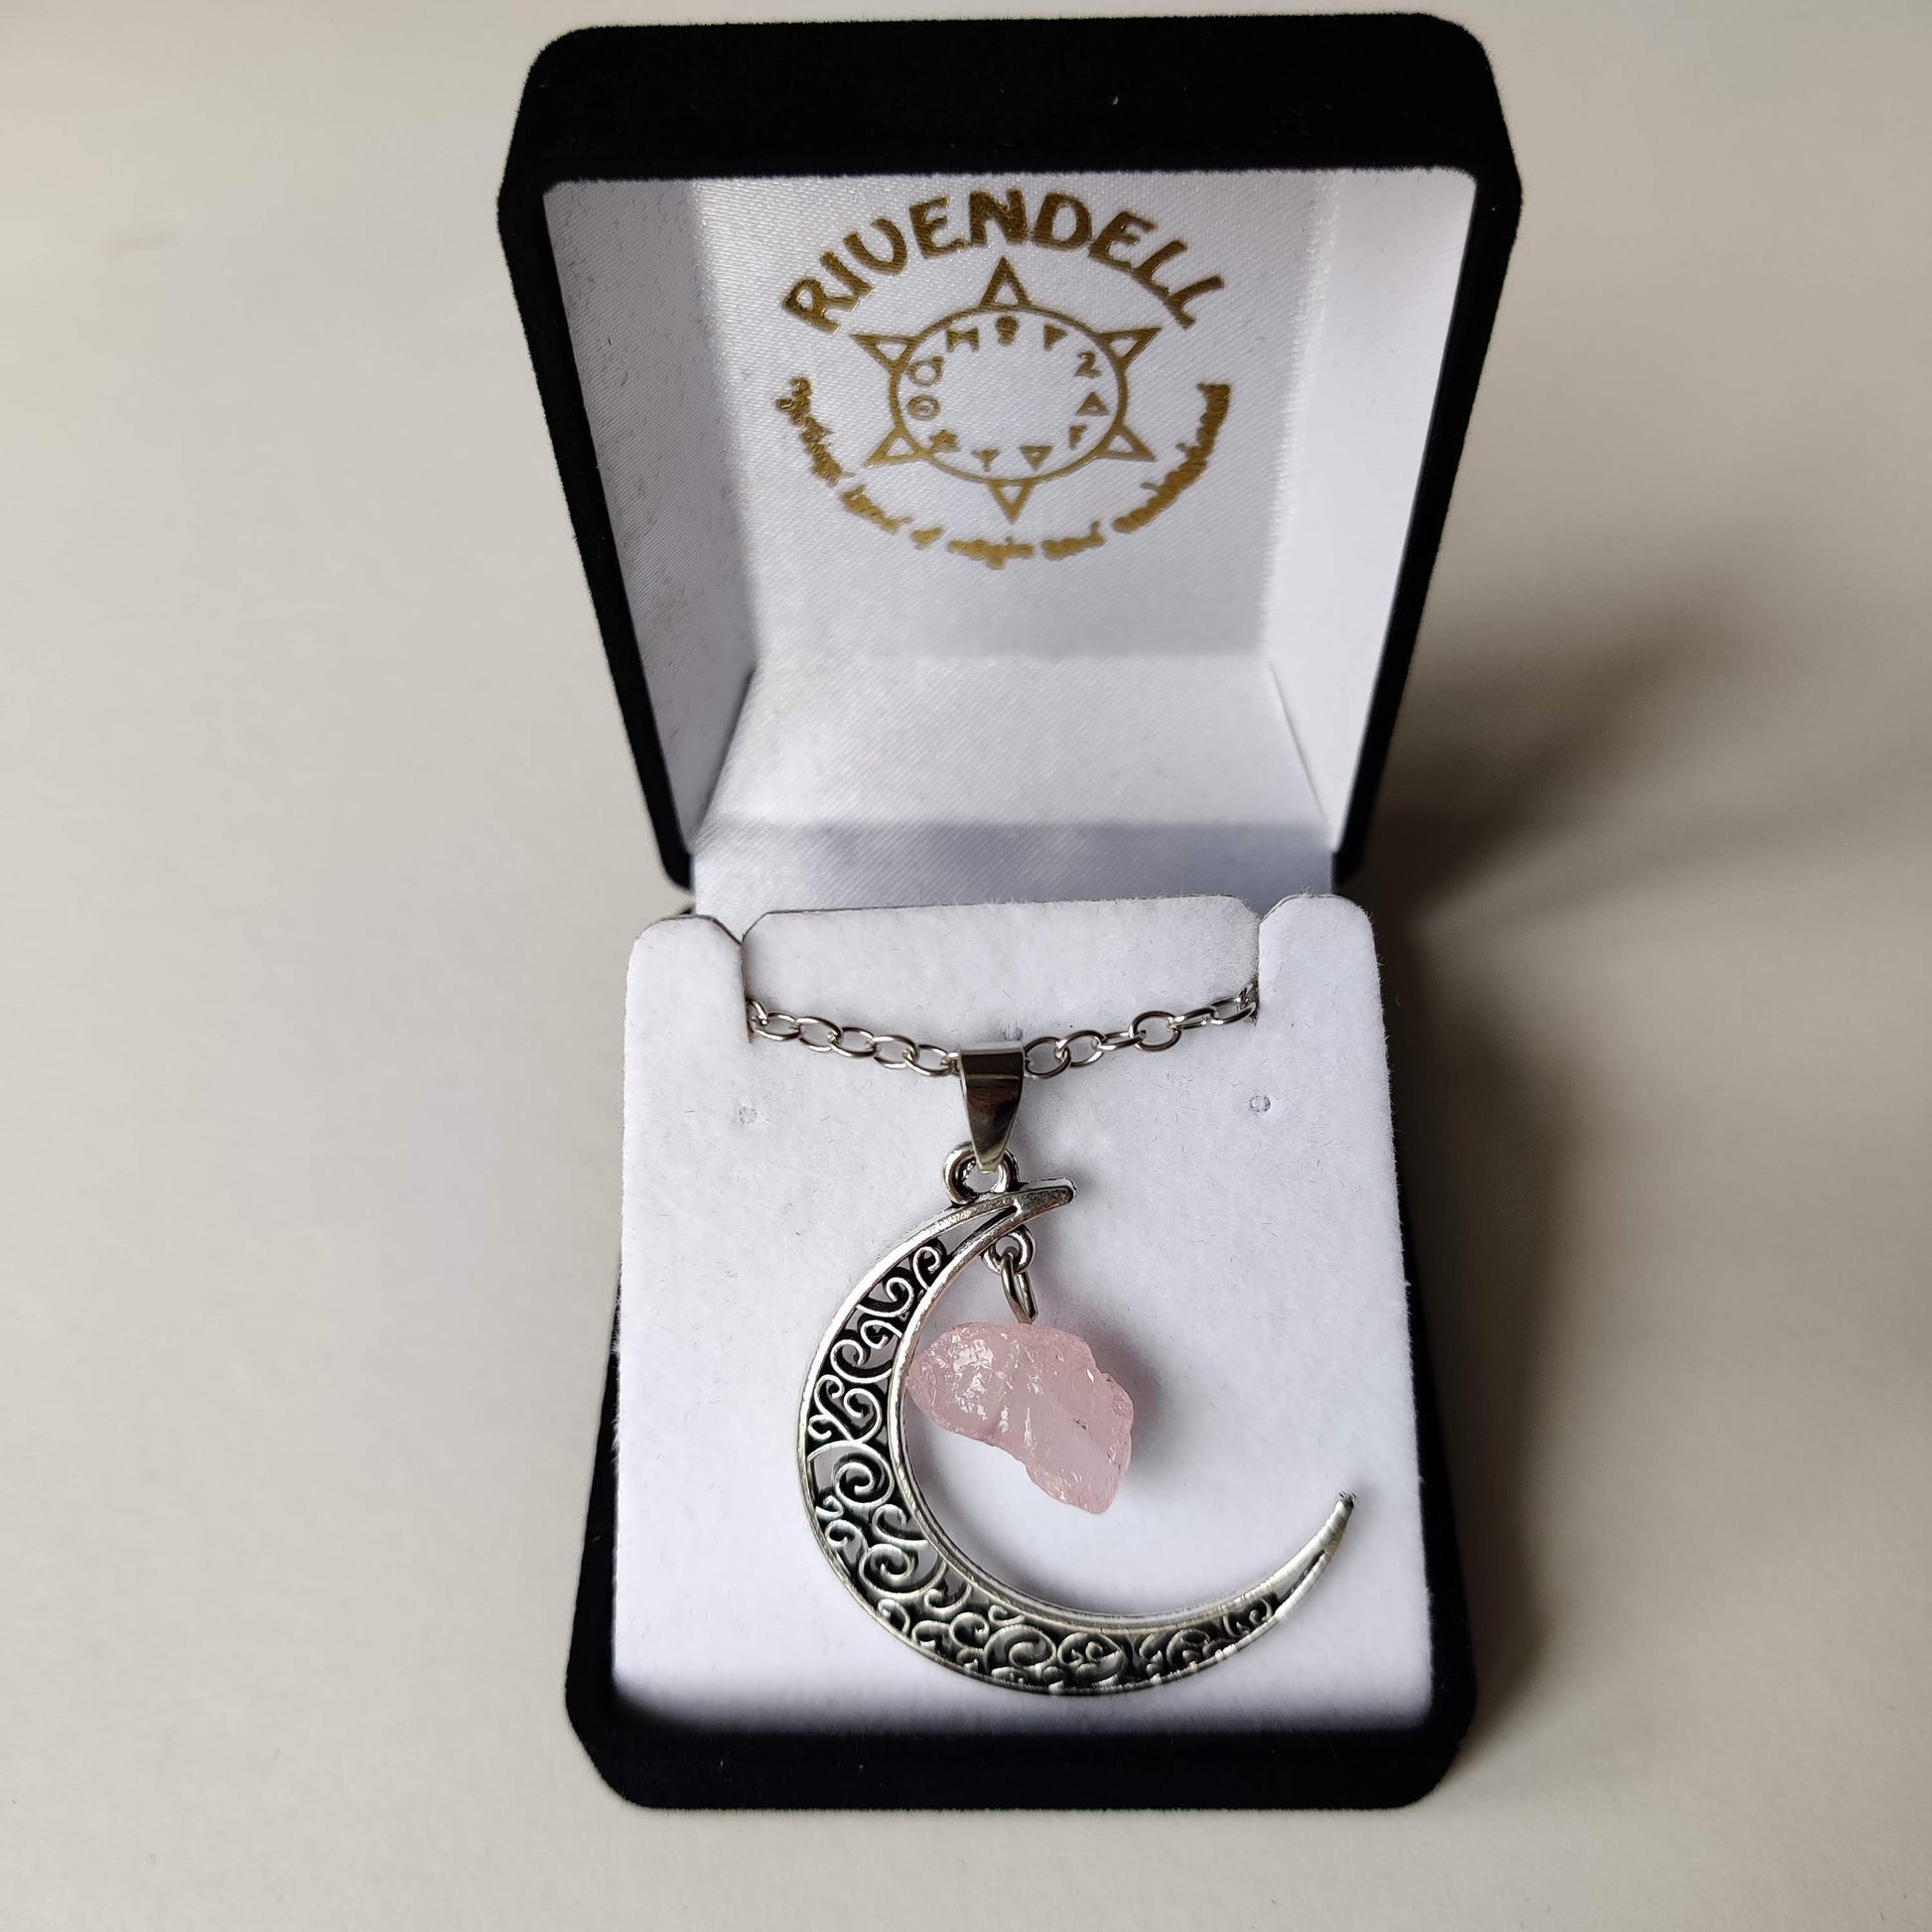 Rose Quartz Moon Pendant with Silver Chain - Rivendell Shop